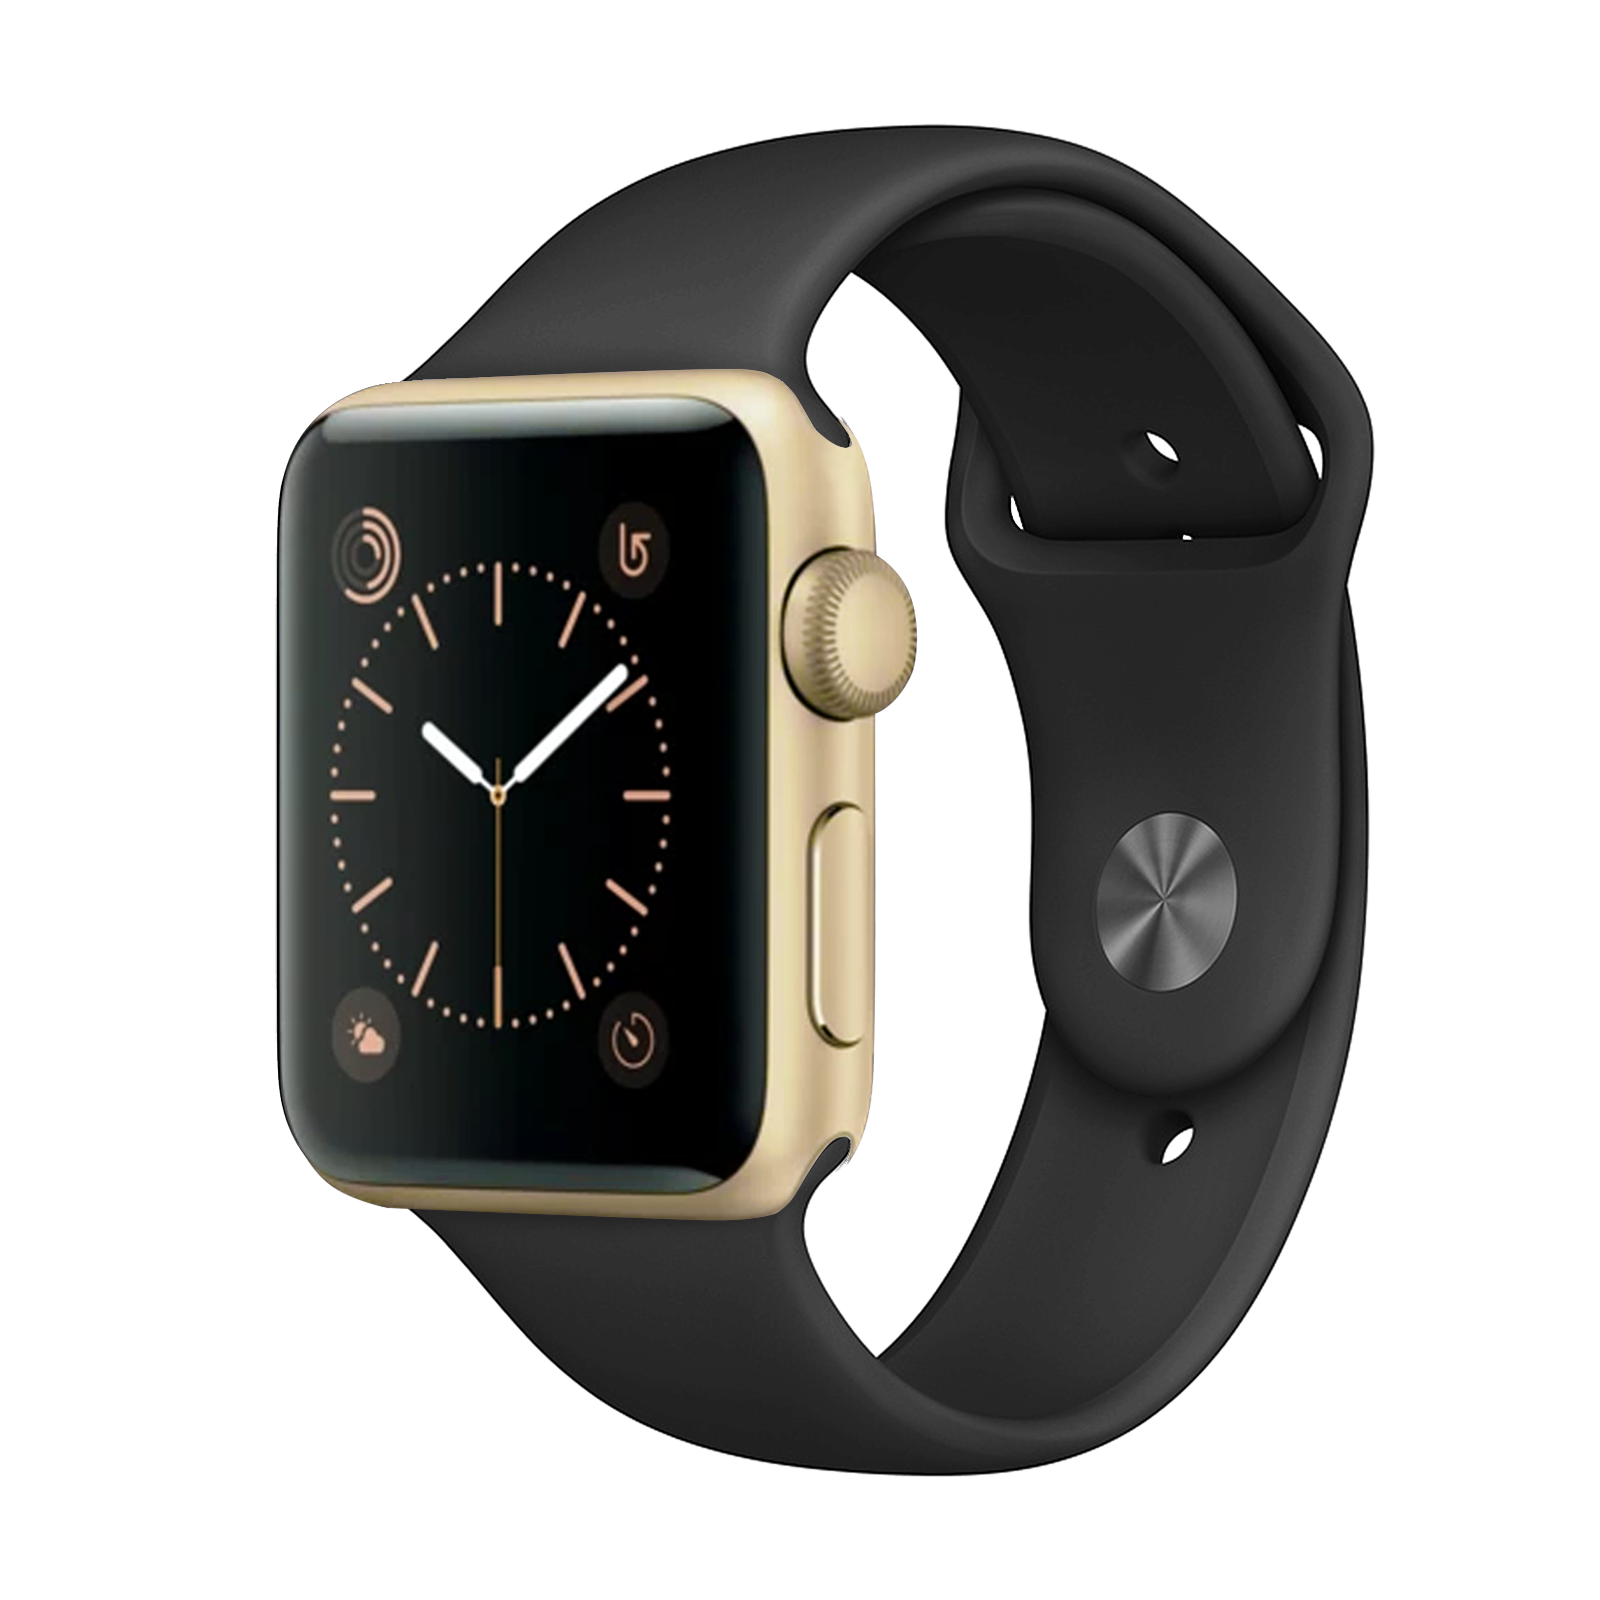 Apple Watch Series 2 Aluminum 42mm Gold Very Good - WiFi